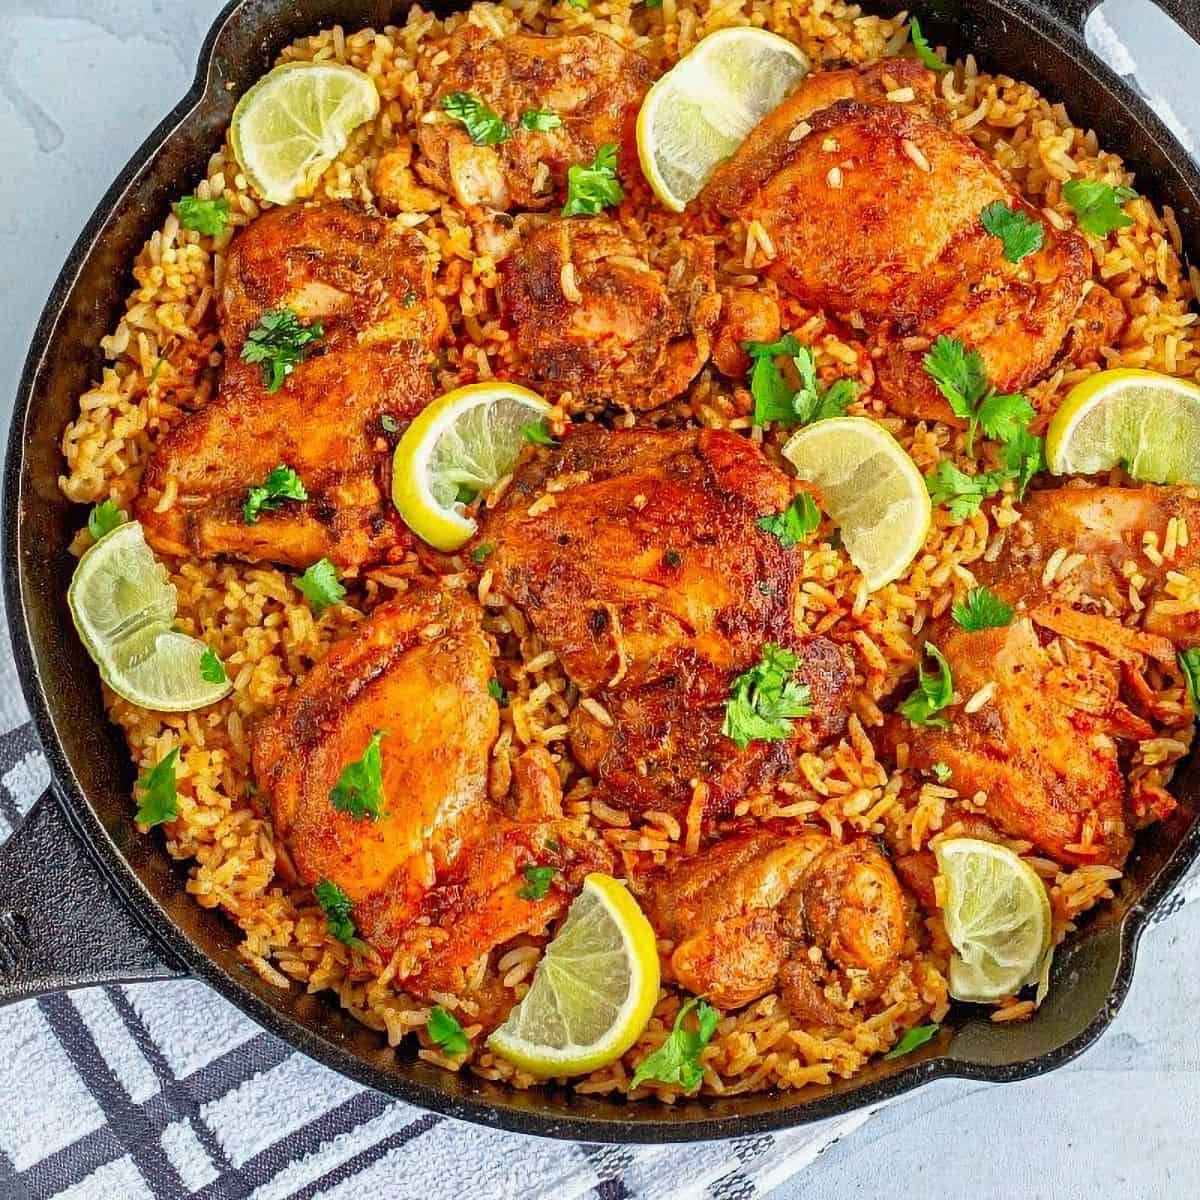 3. One Pan Spanish Chicken and Rice - Spanish recipe for chicken